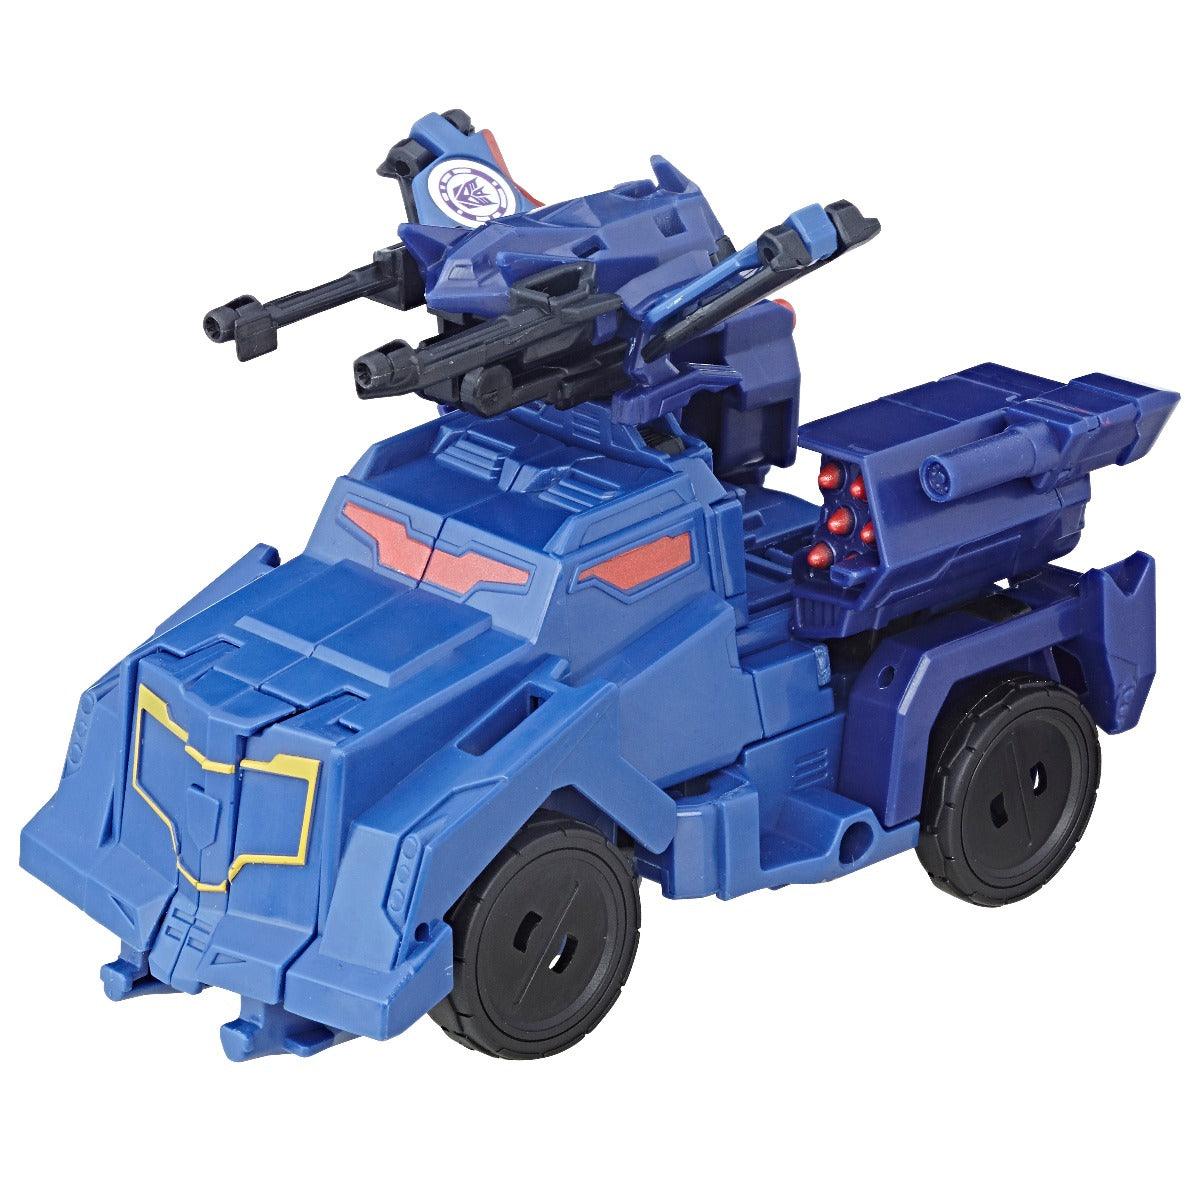 Transformers: RID Combiner Force Activator Combiners Soundwave & Laserbeak